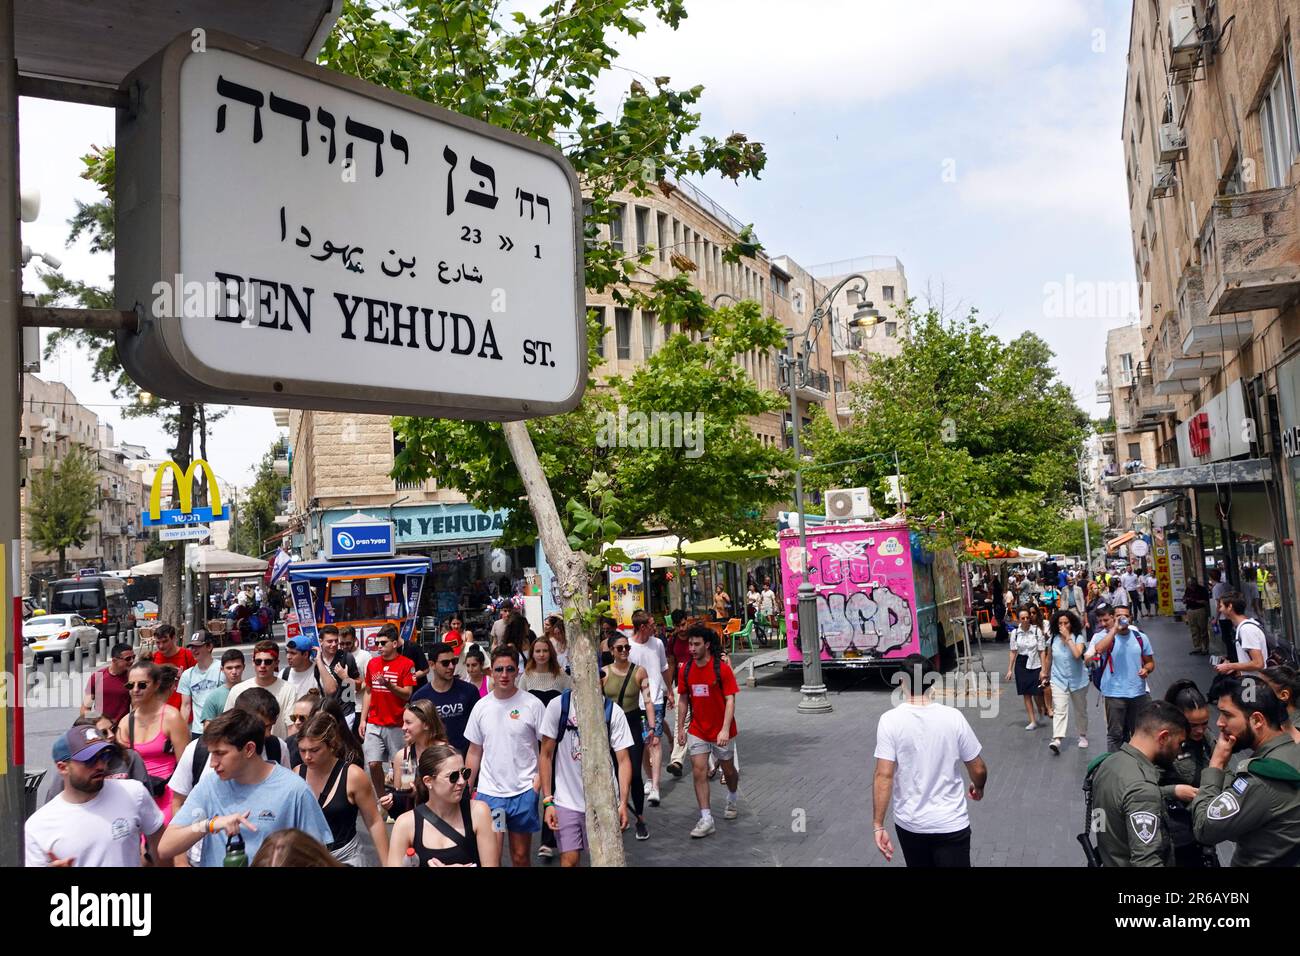 Ben Yehuda Street Roadsign Stock Photo